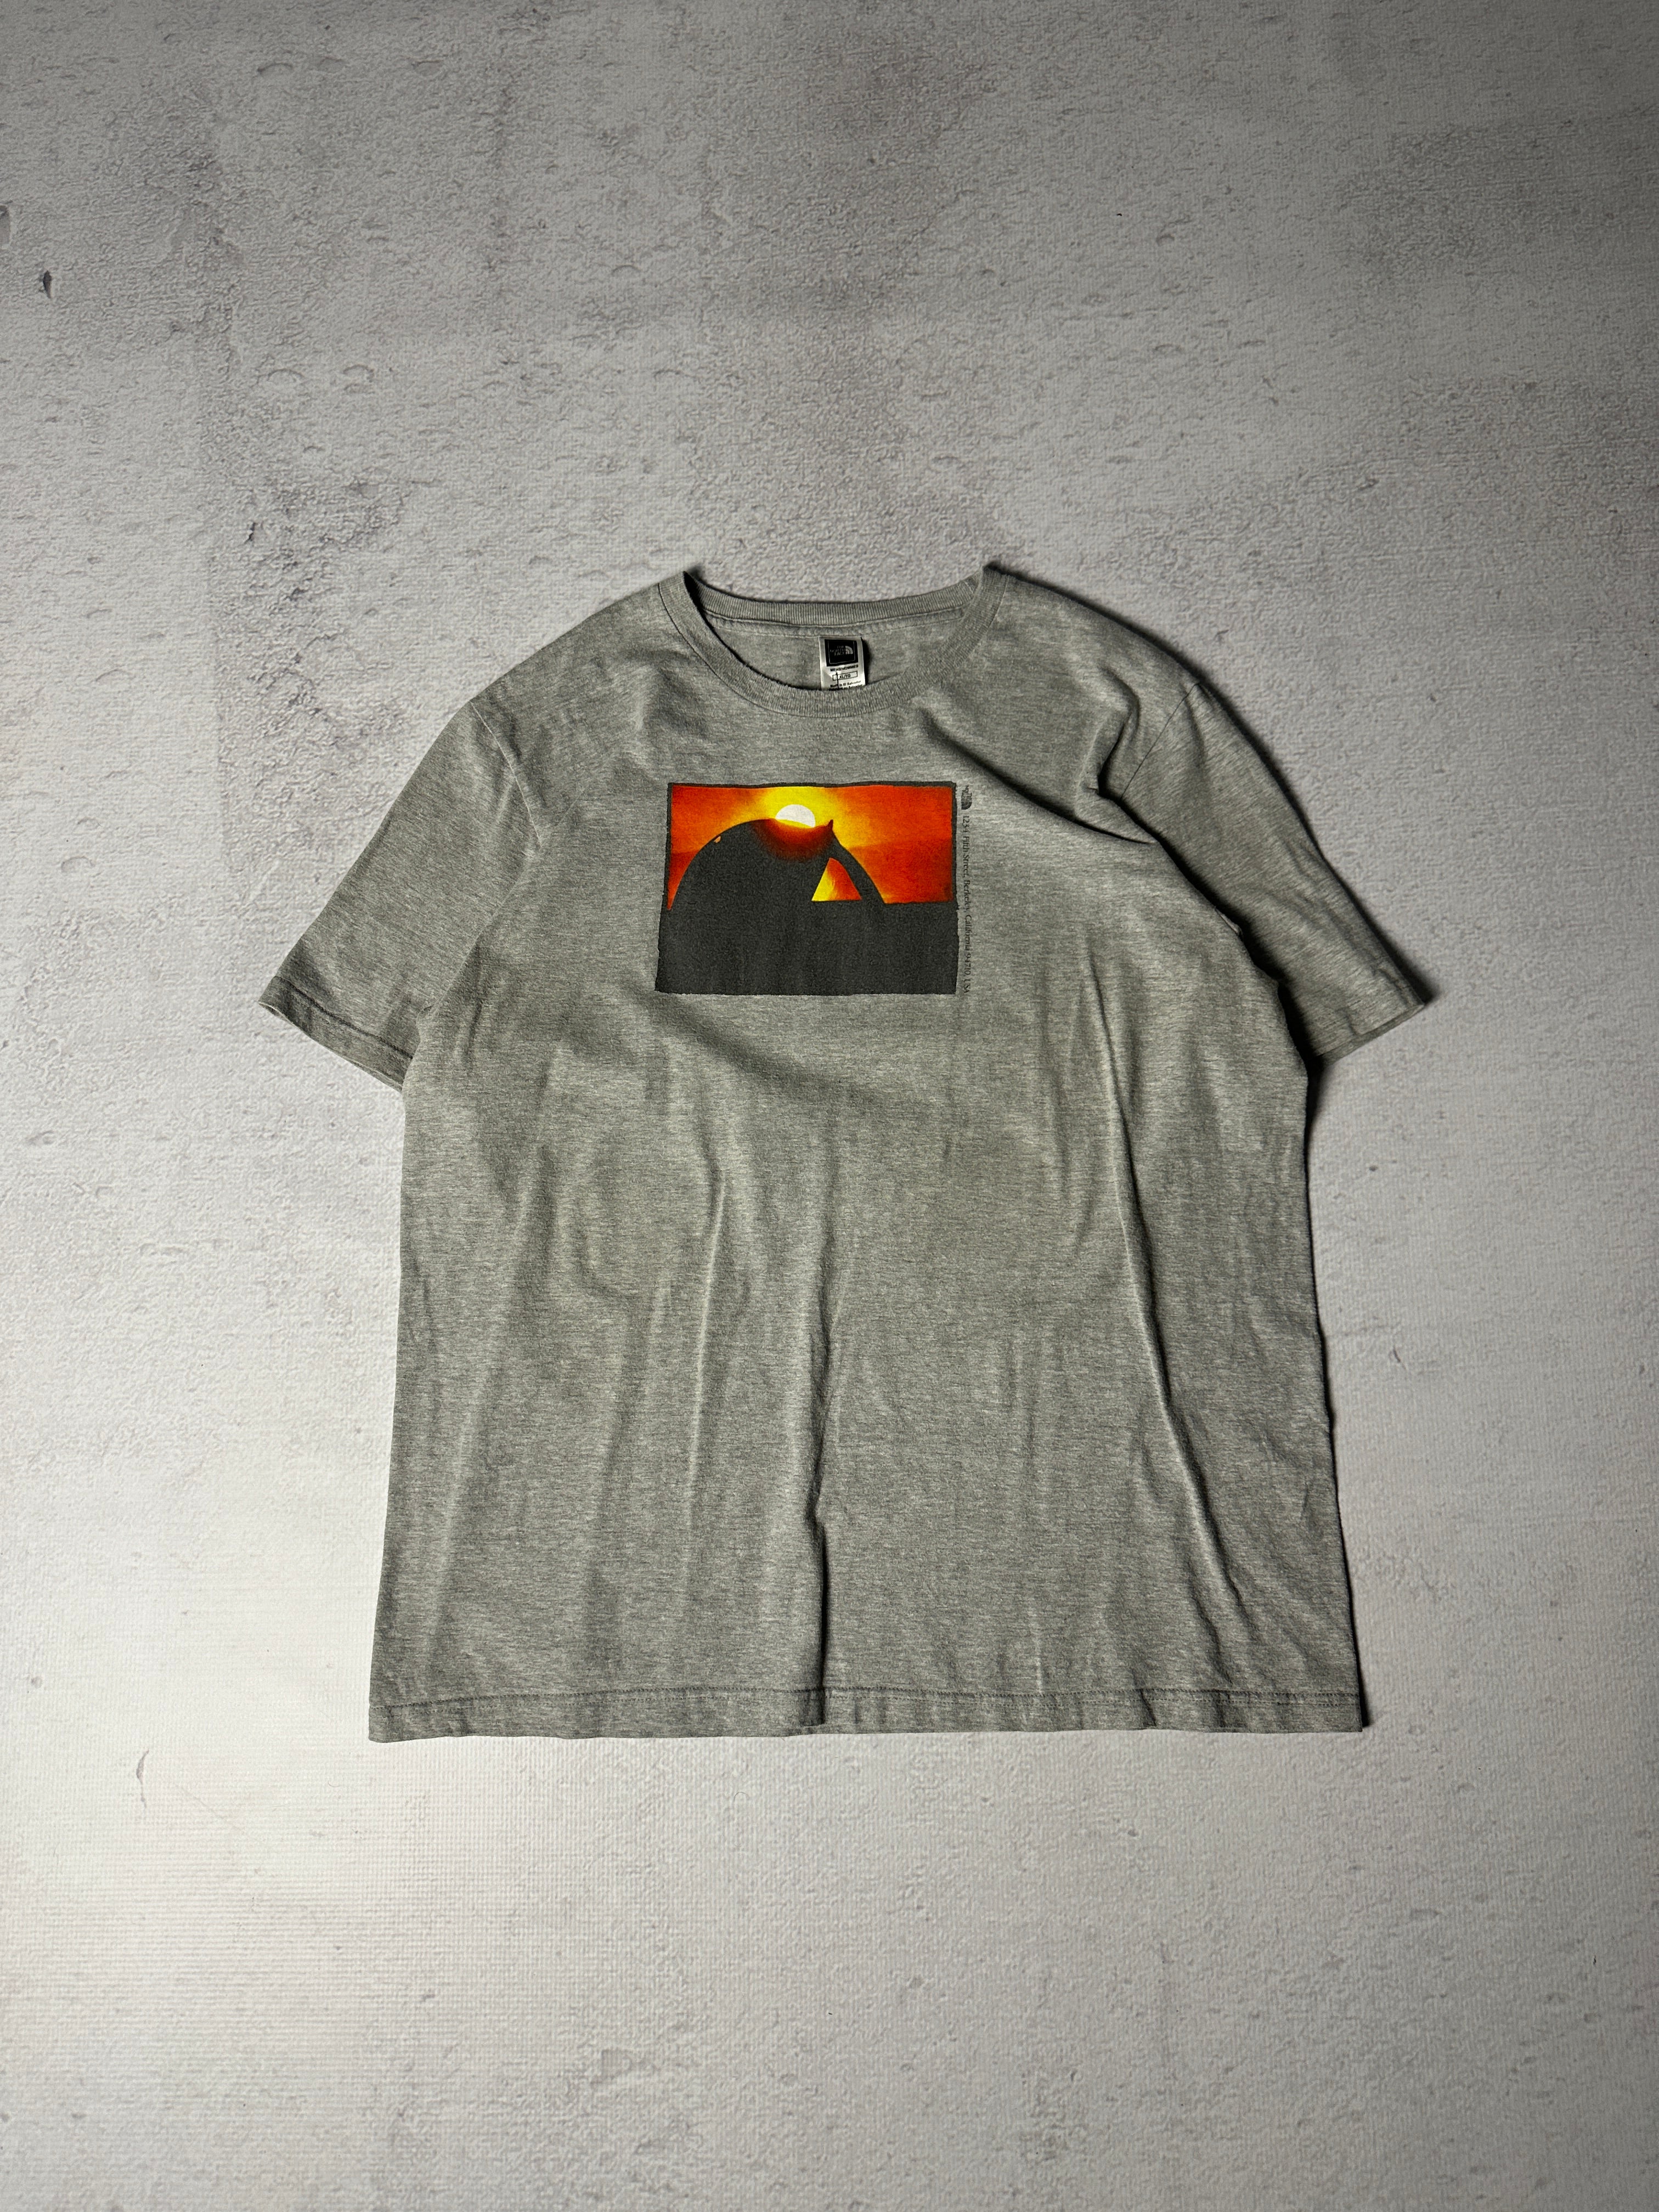 Vintage The North Face Graphic T-Shirt - Men's XL